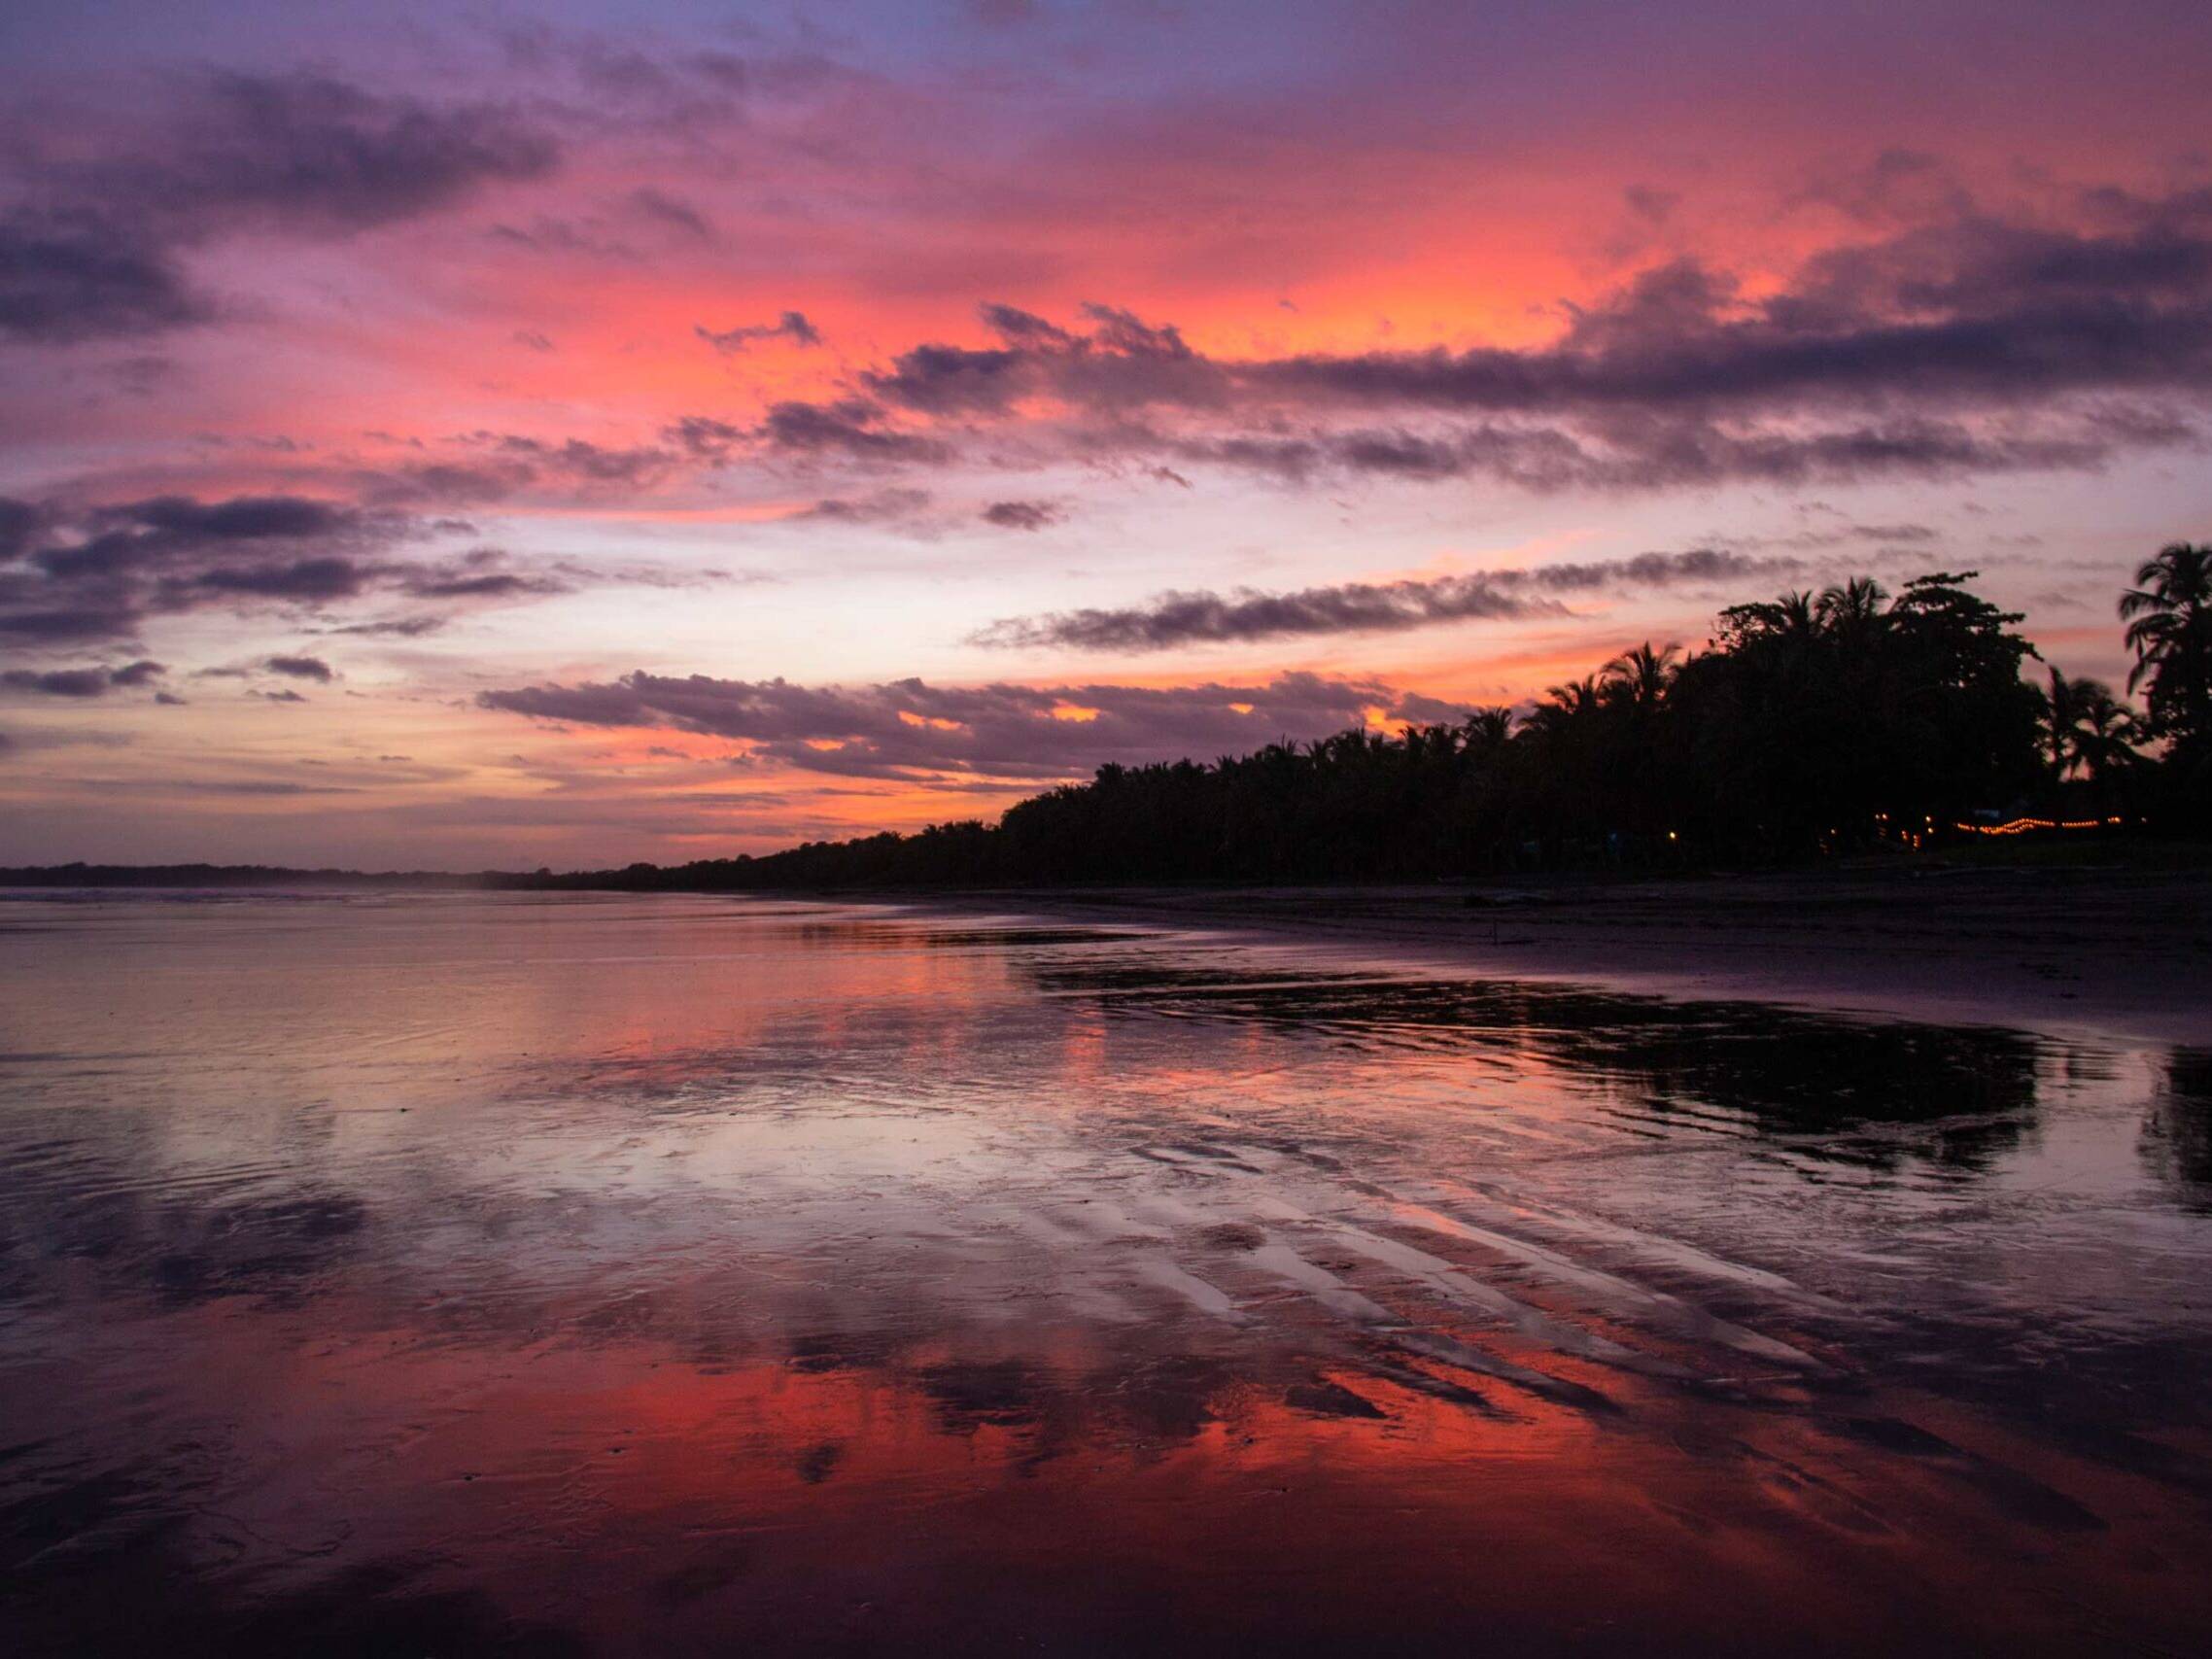 Sunset at Playa Esterillos in Costa Rica